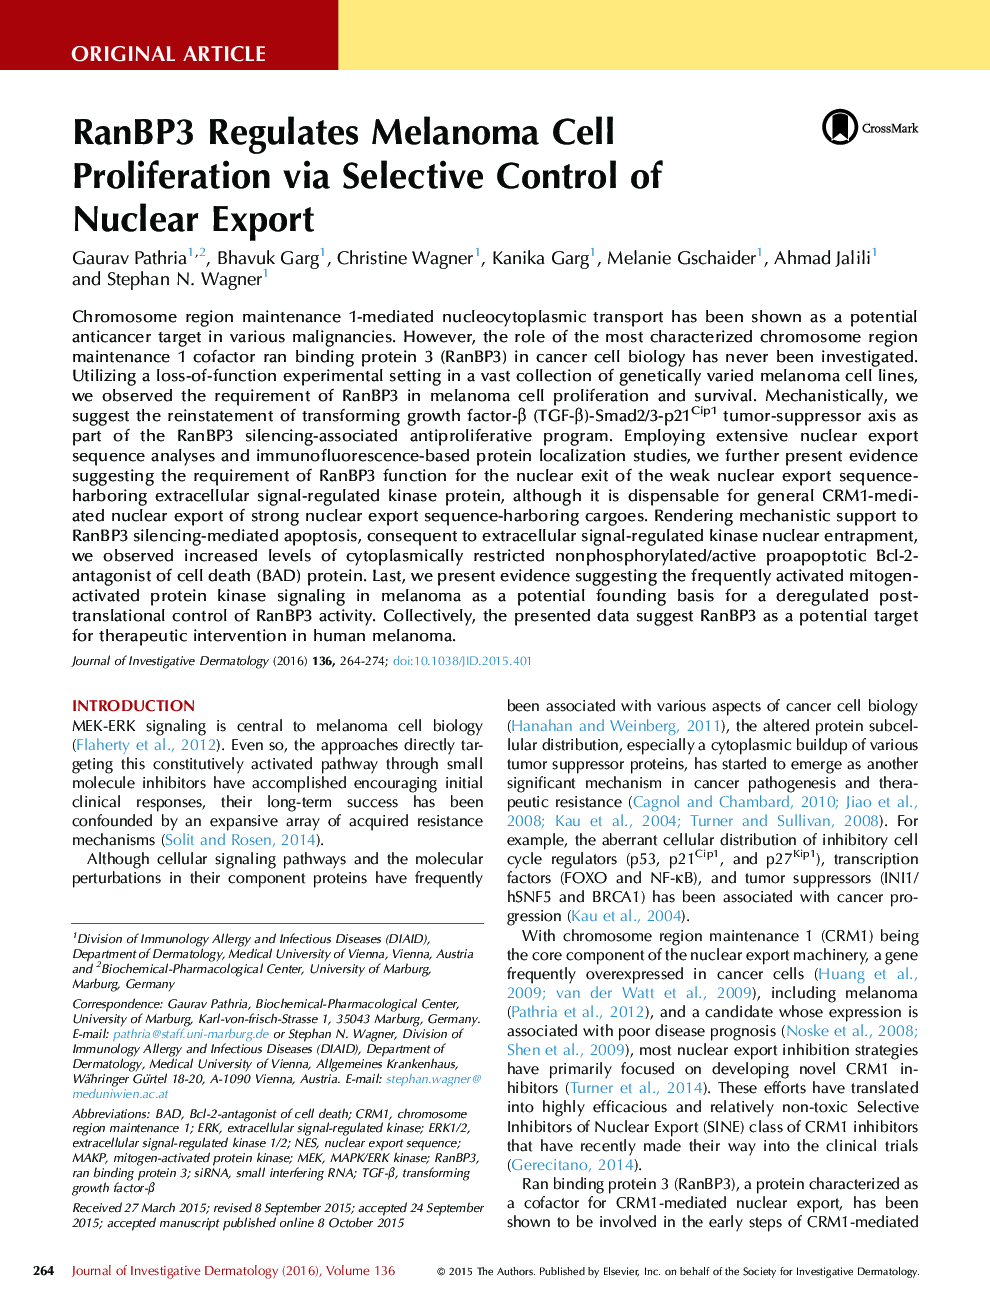 RanBP3 Regulates Melanoma Cell Proliferation via Selective Control of Nuclear Export